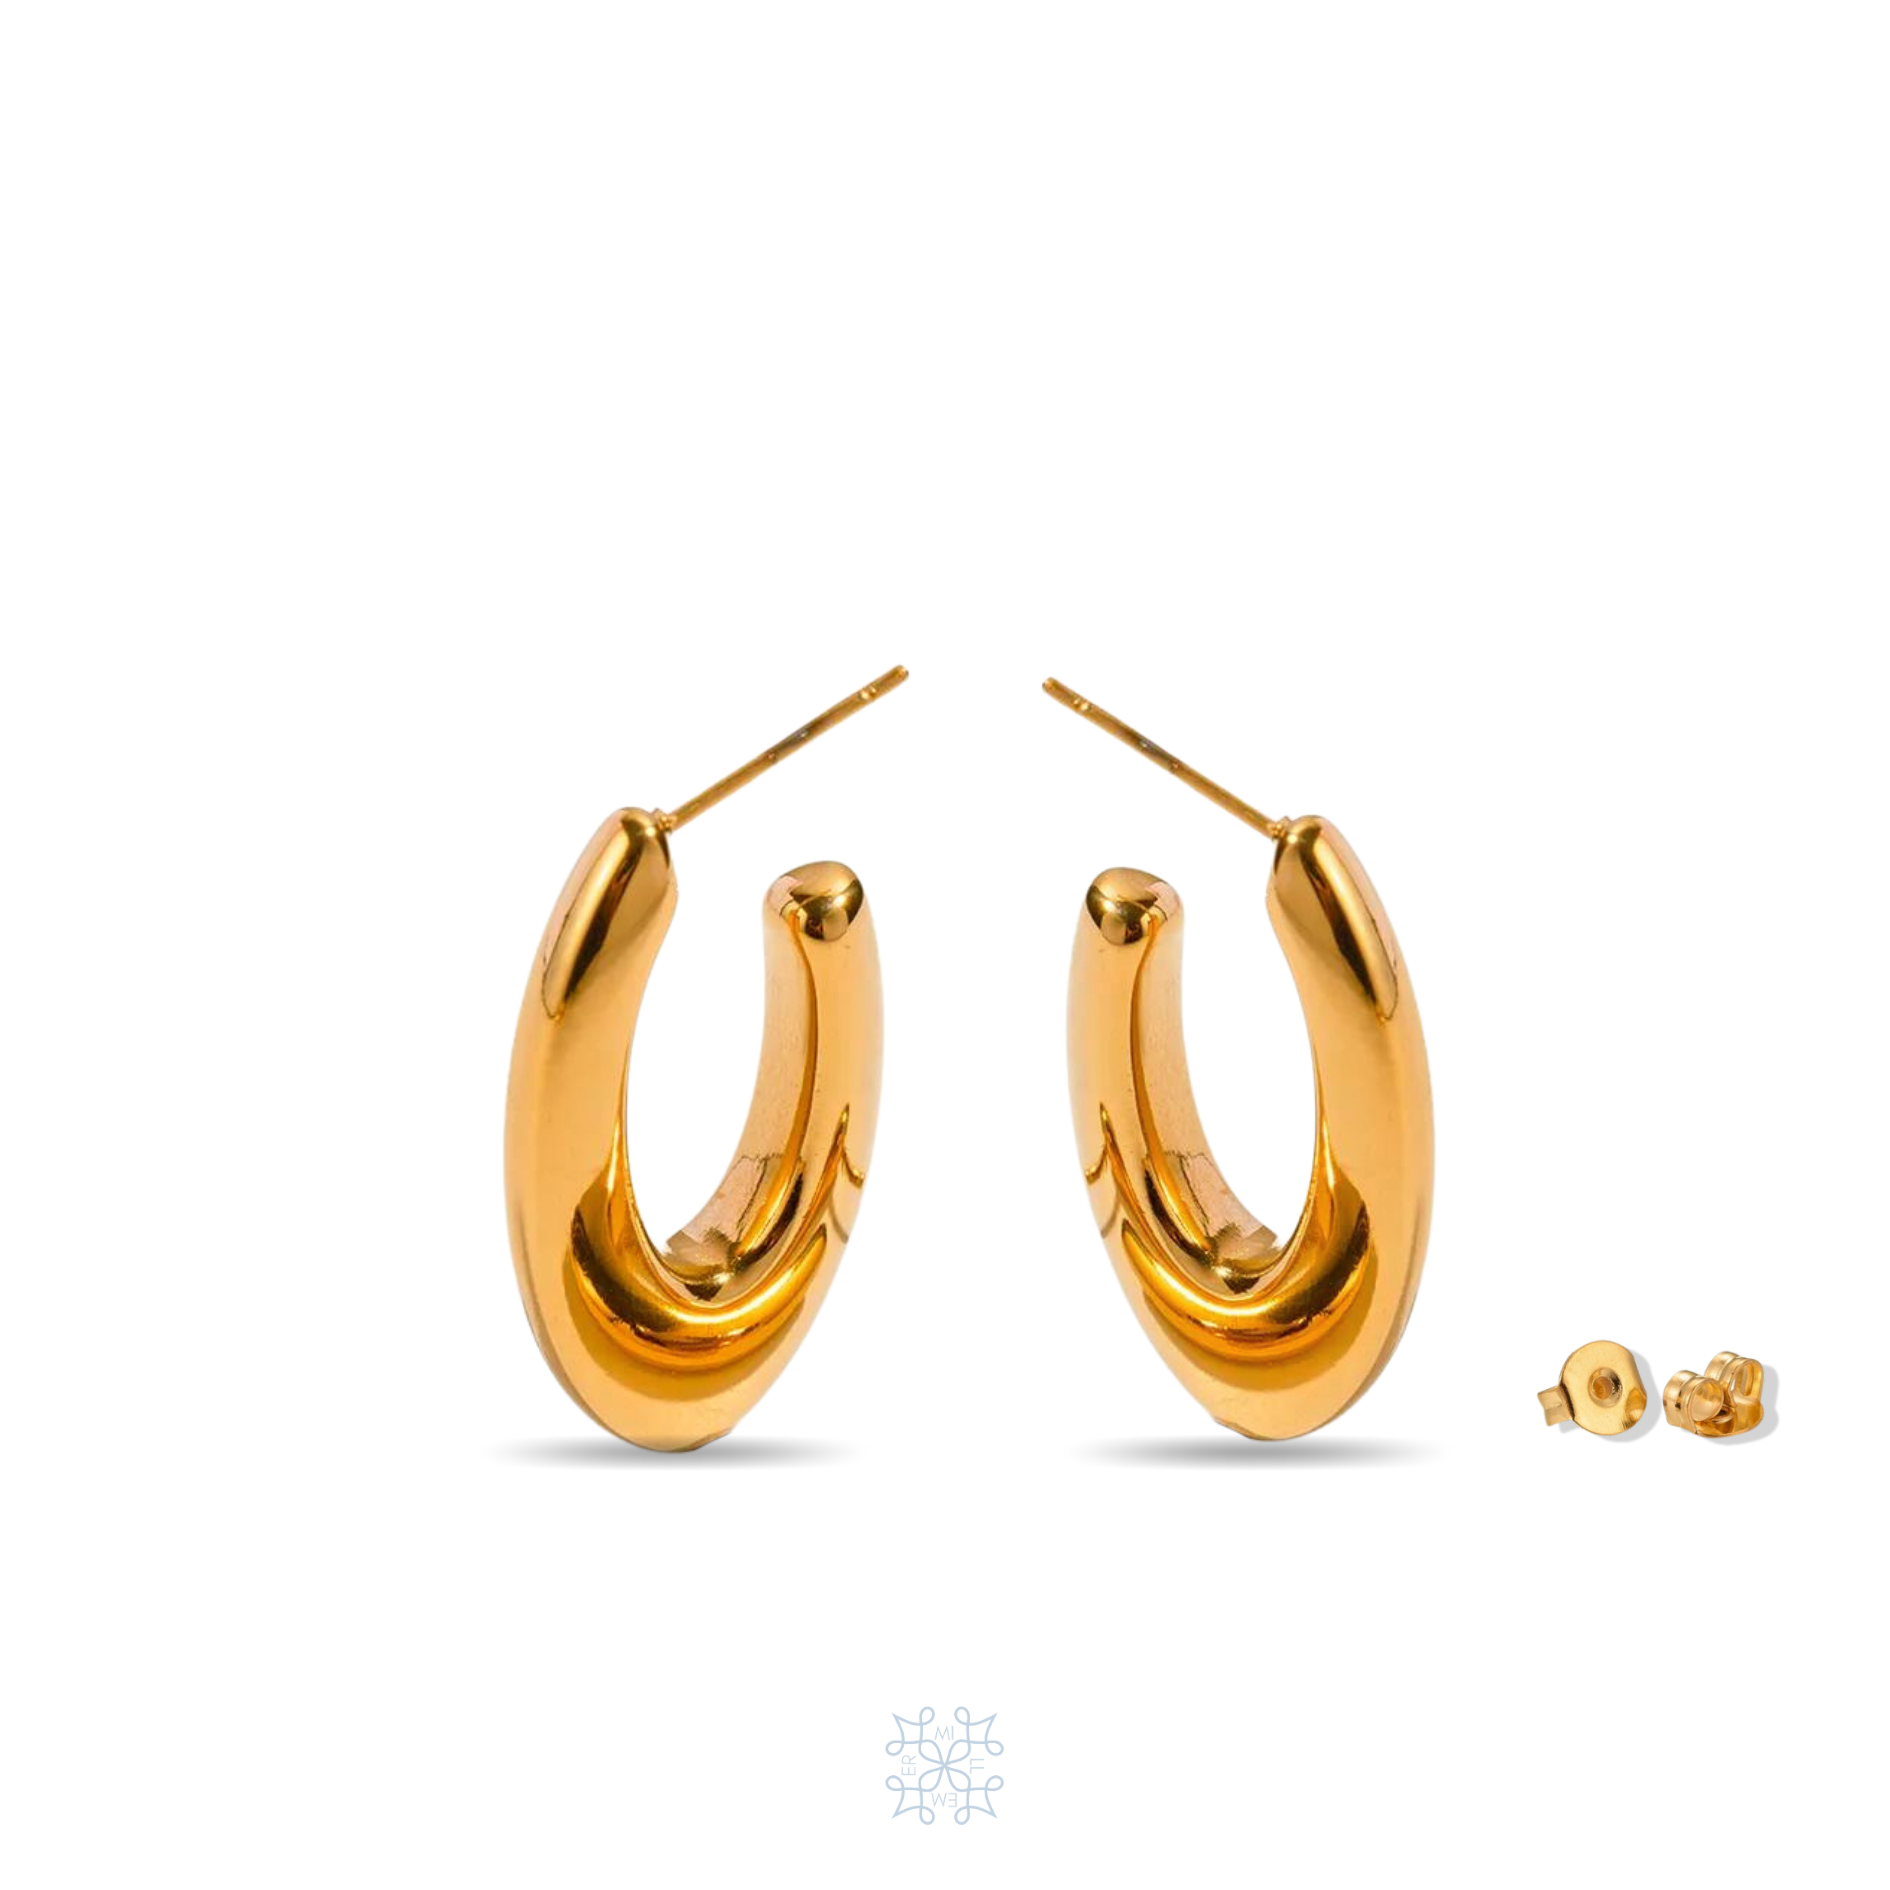 Gold Plated Oval shape Hoop Earrings.